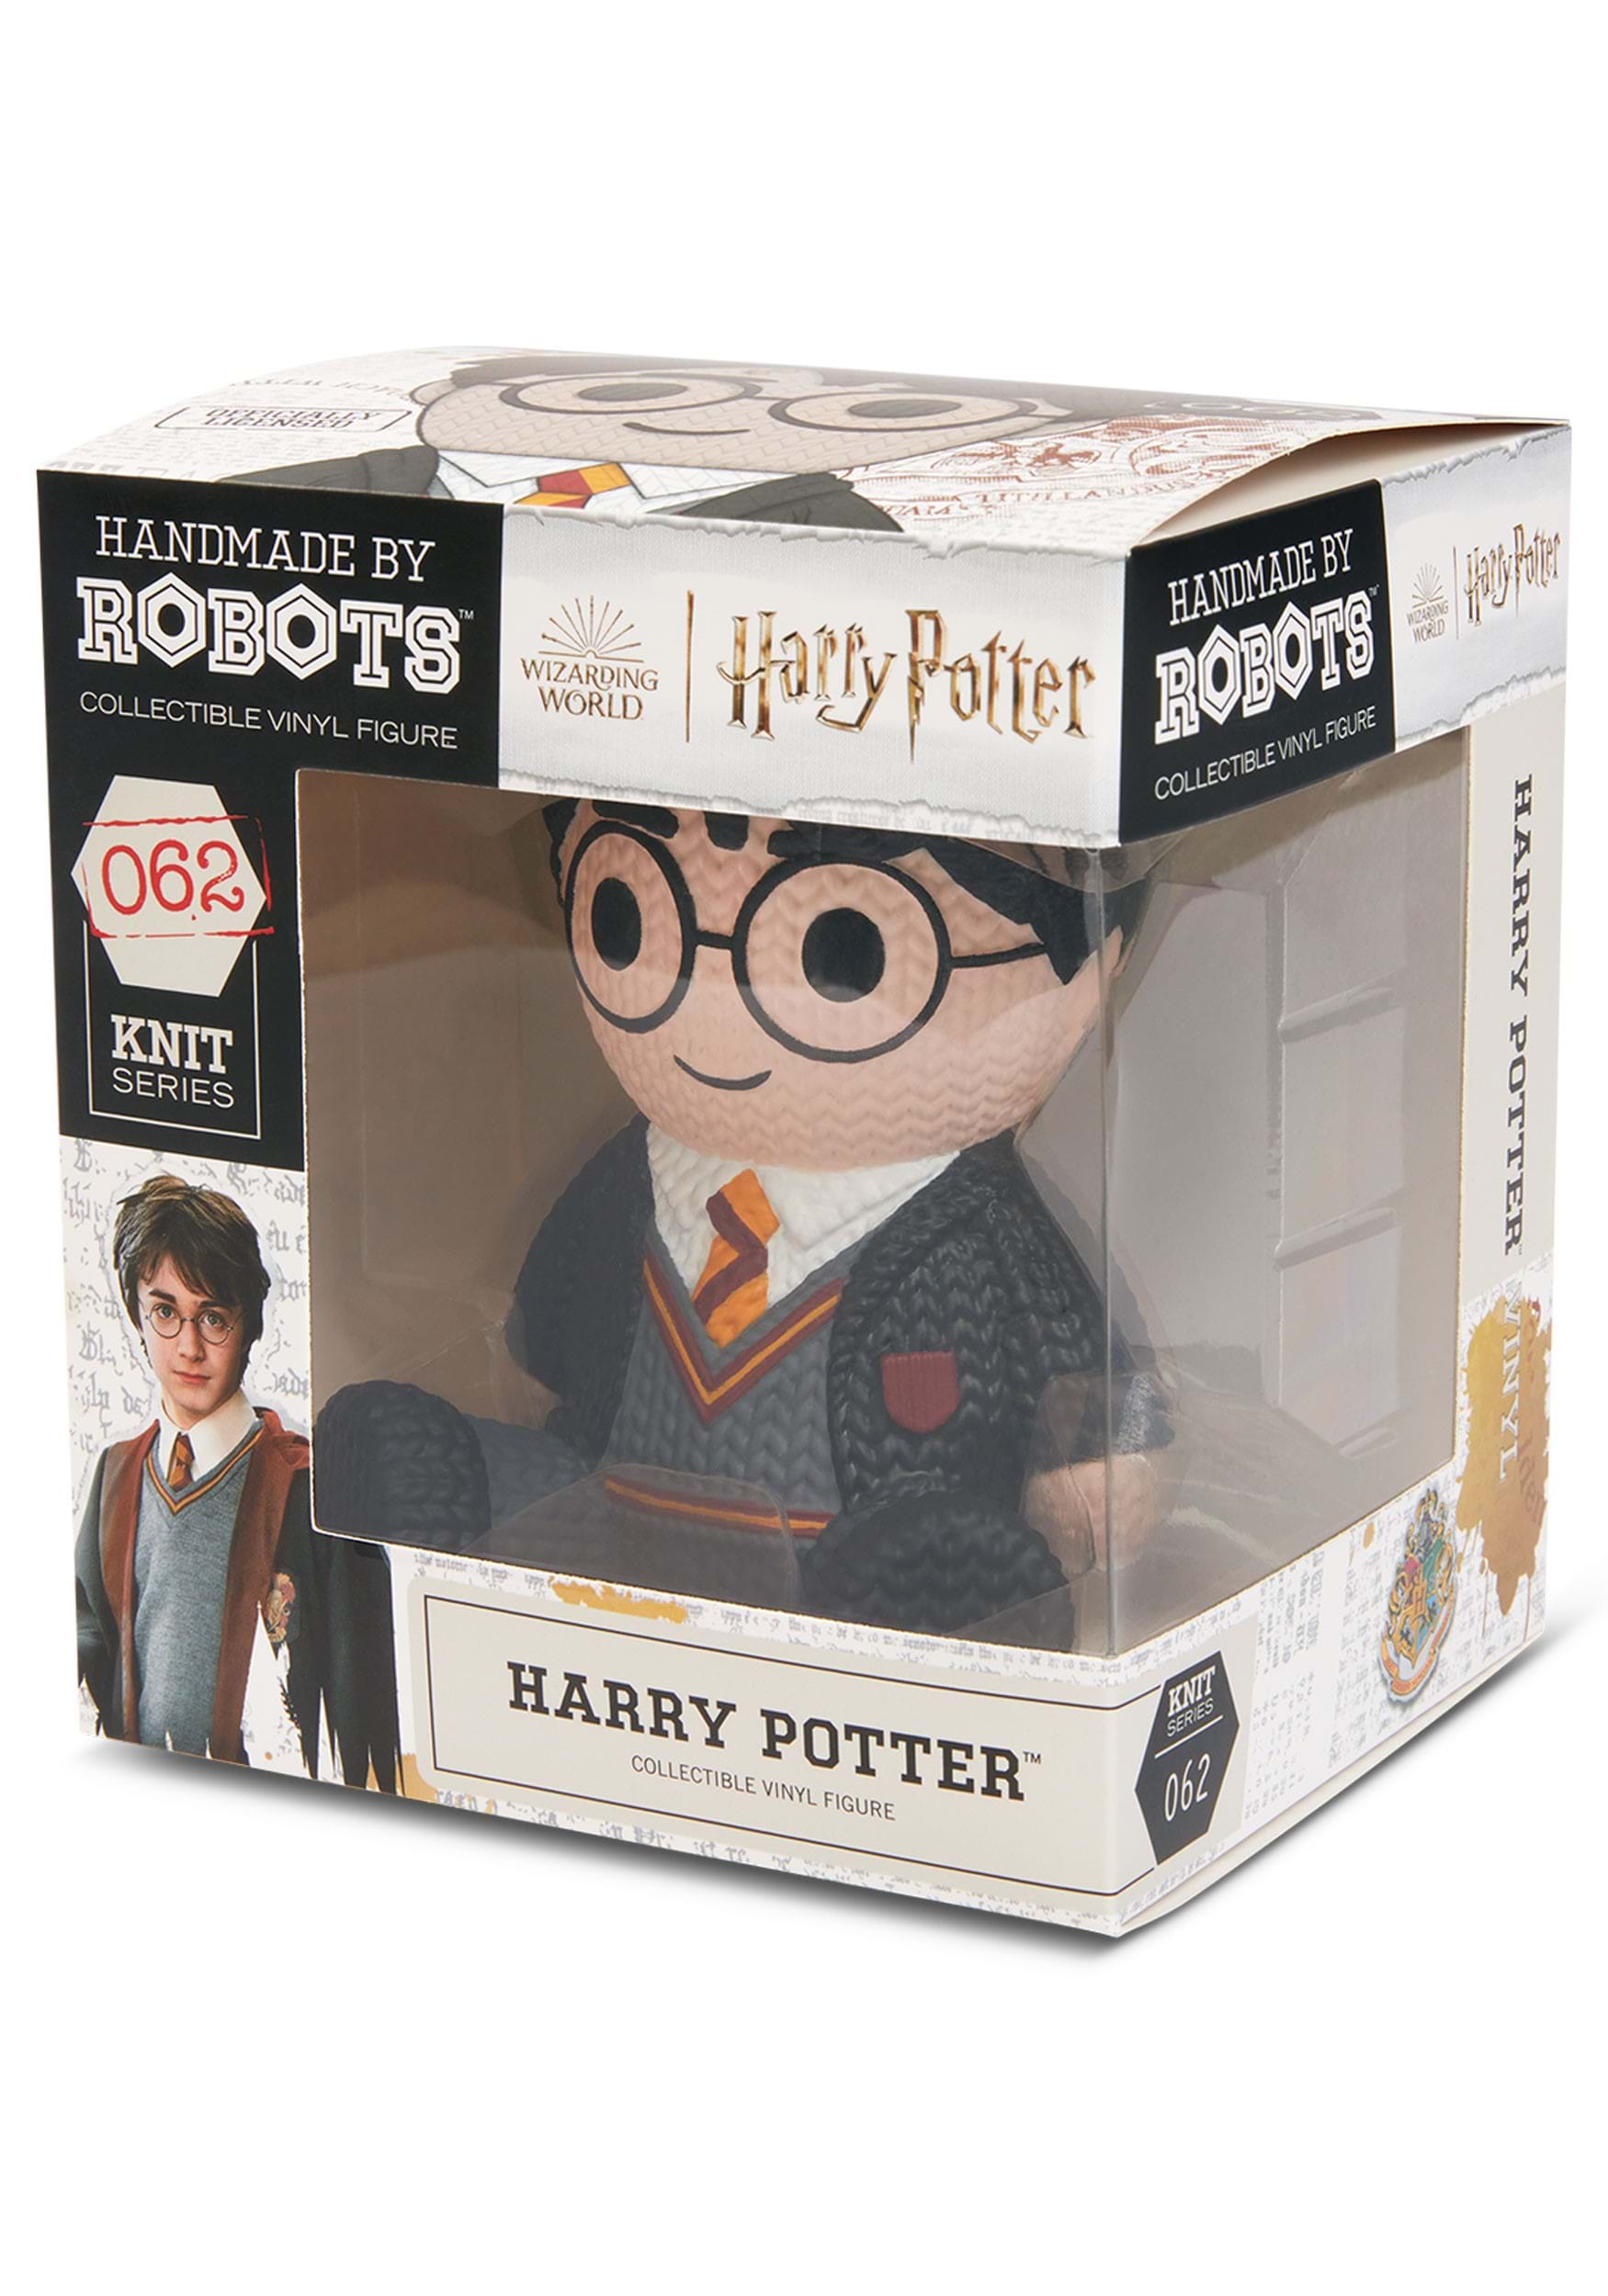 Handmade By Robots Harry Potter Vinyl Figure